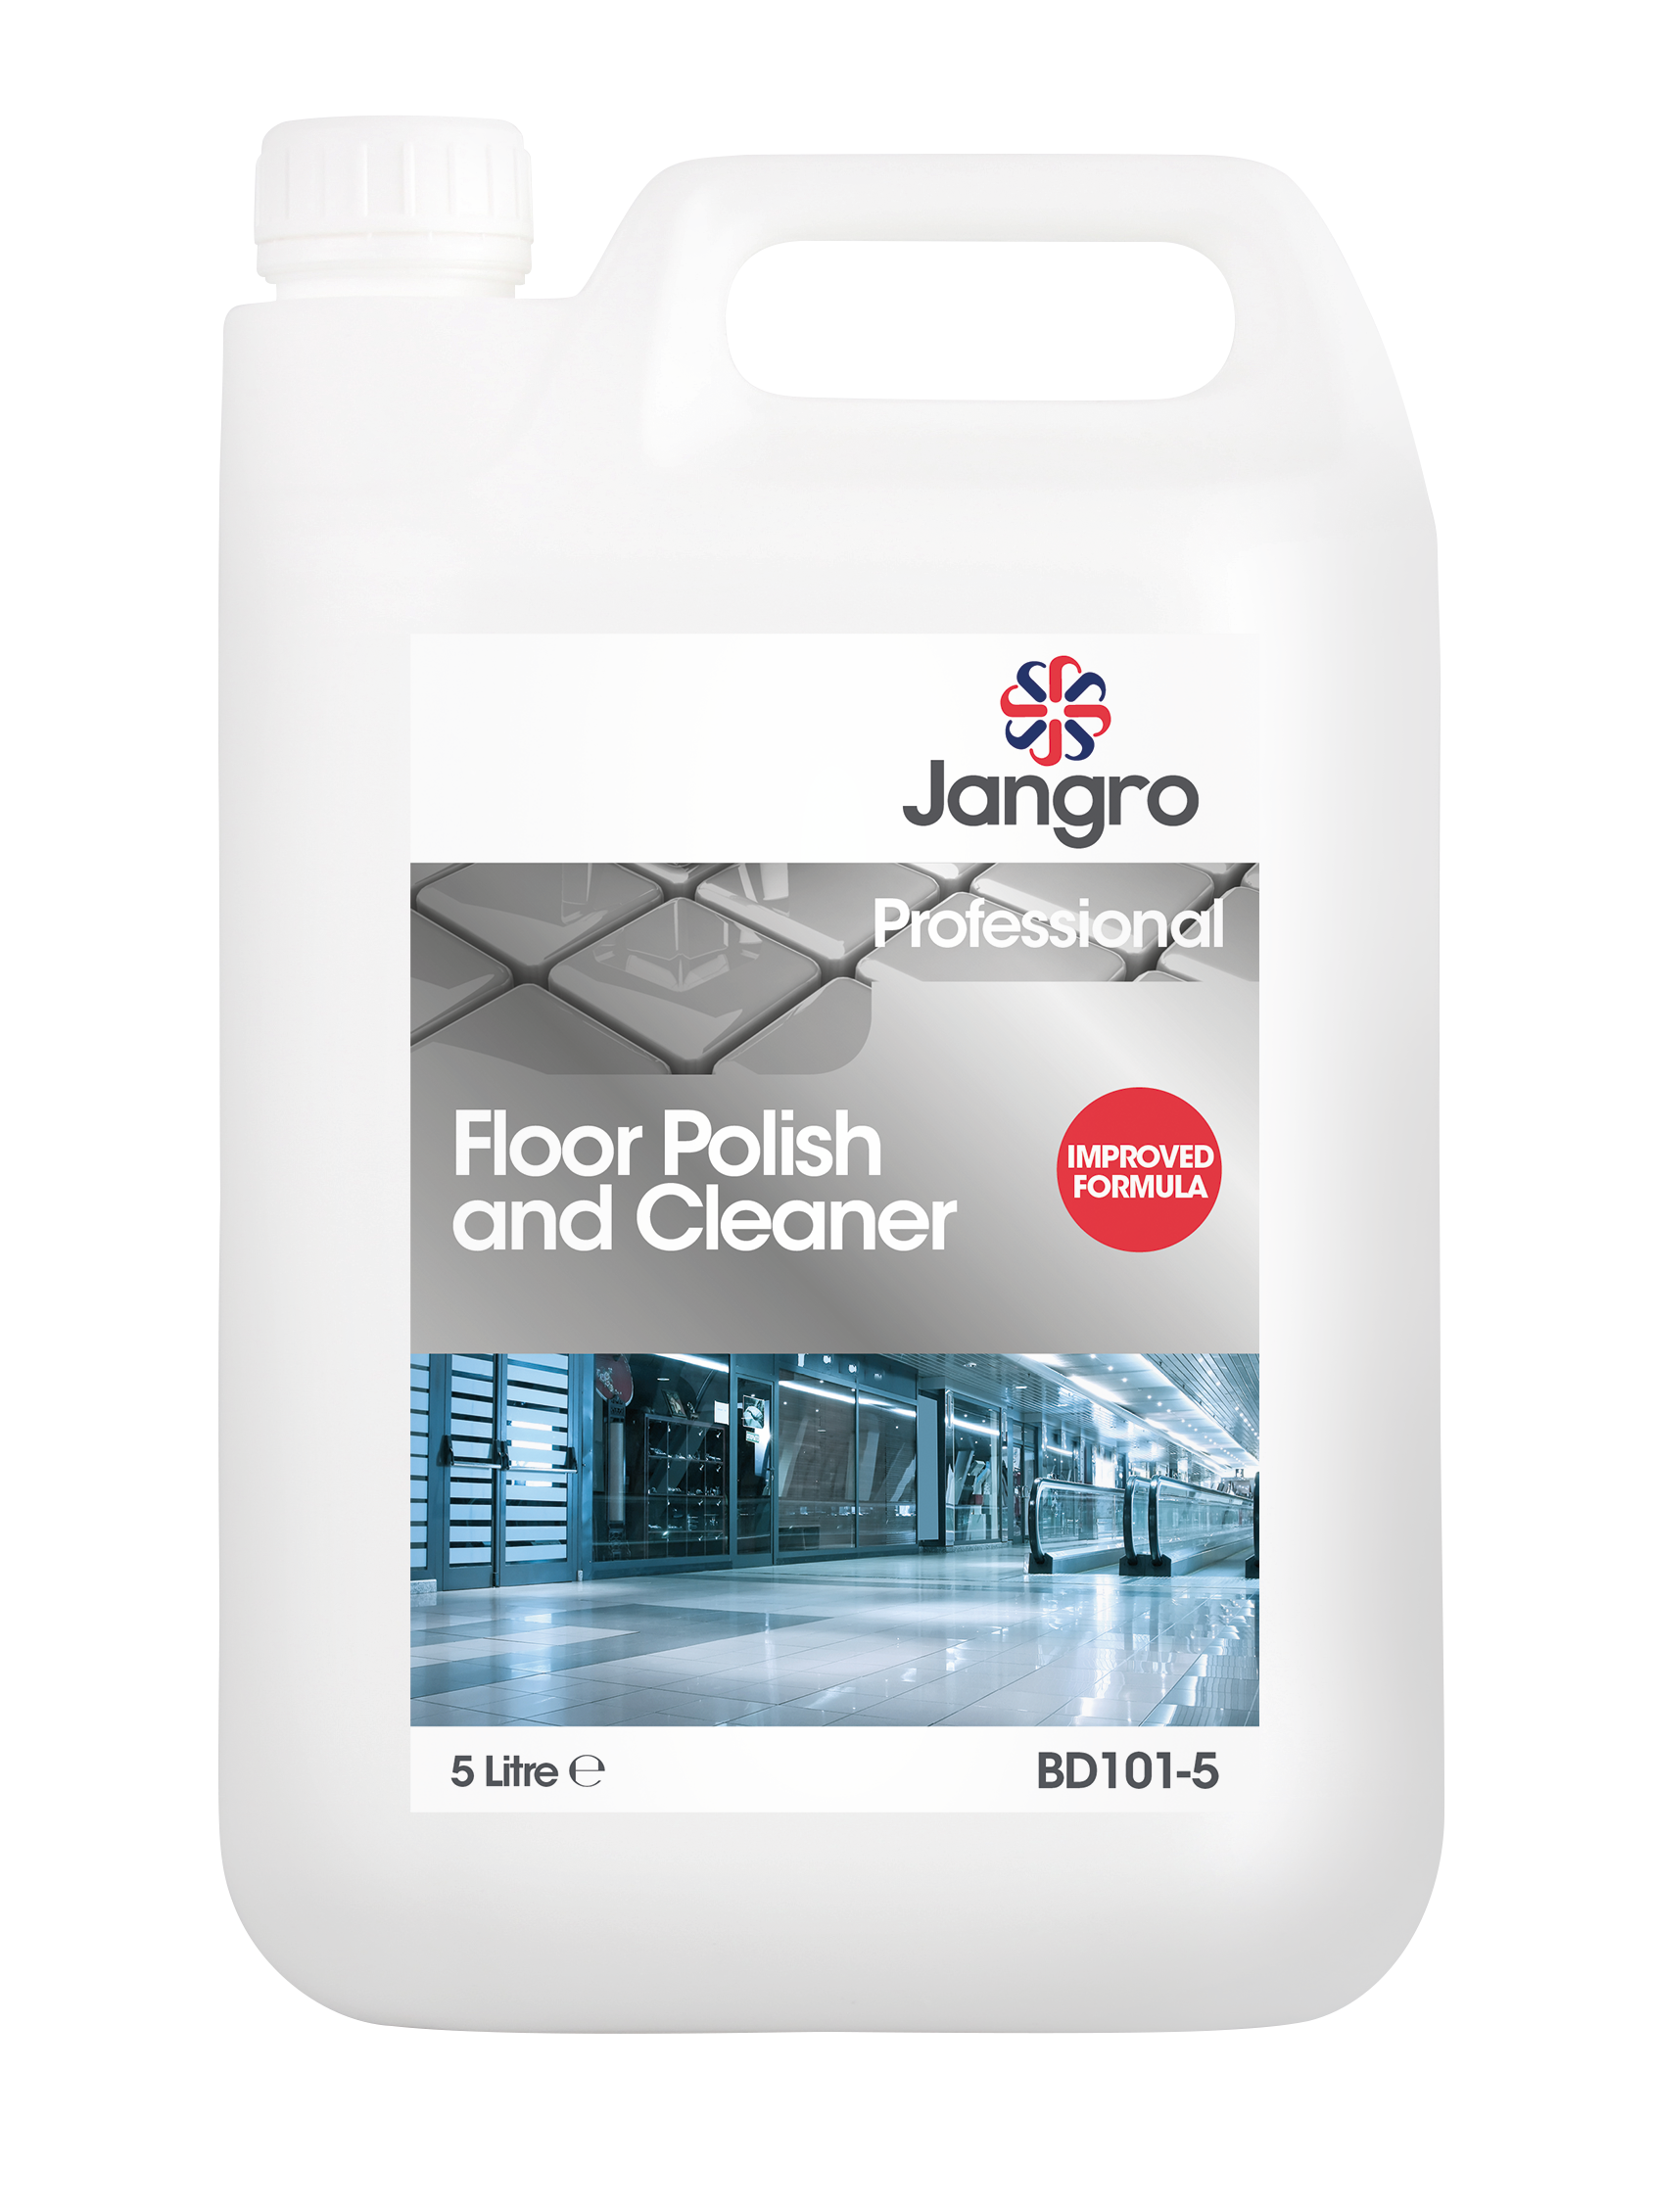 Jangro Floor Polish and Cleaner 5 Litre - B027-5LX2-JANGRO